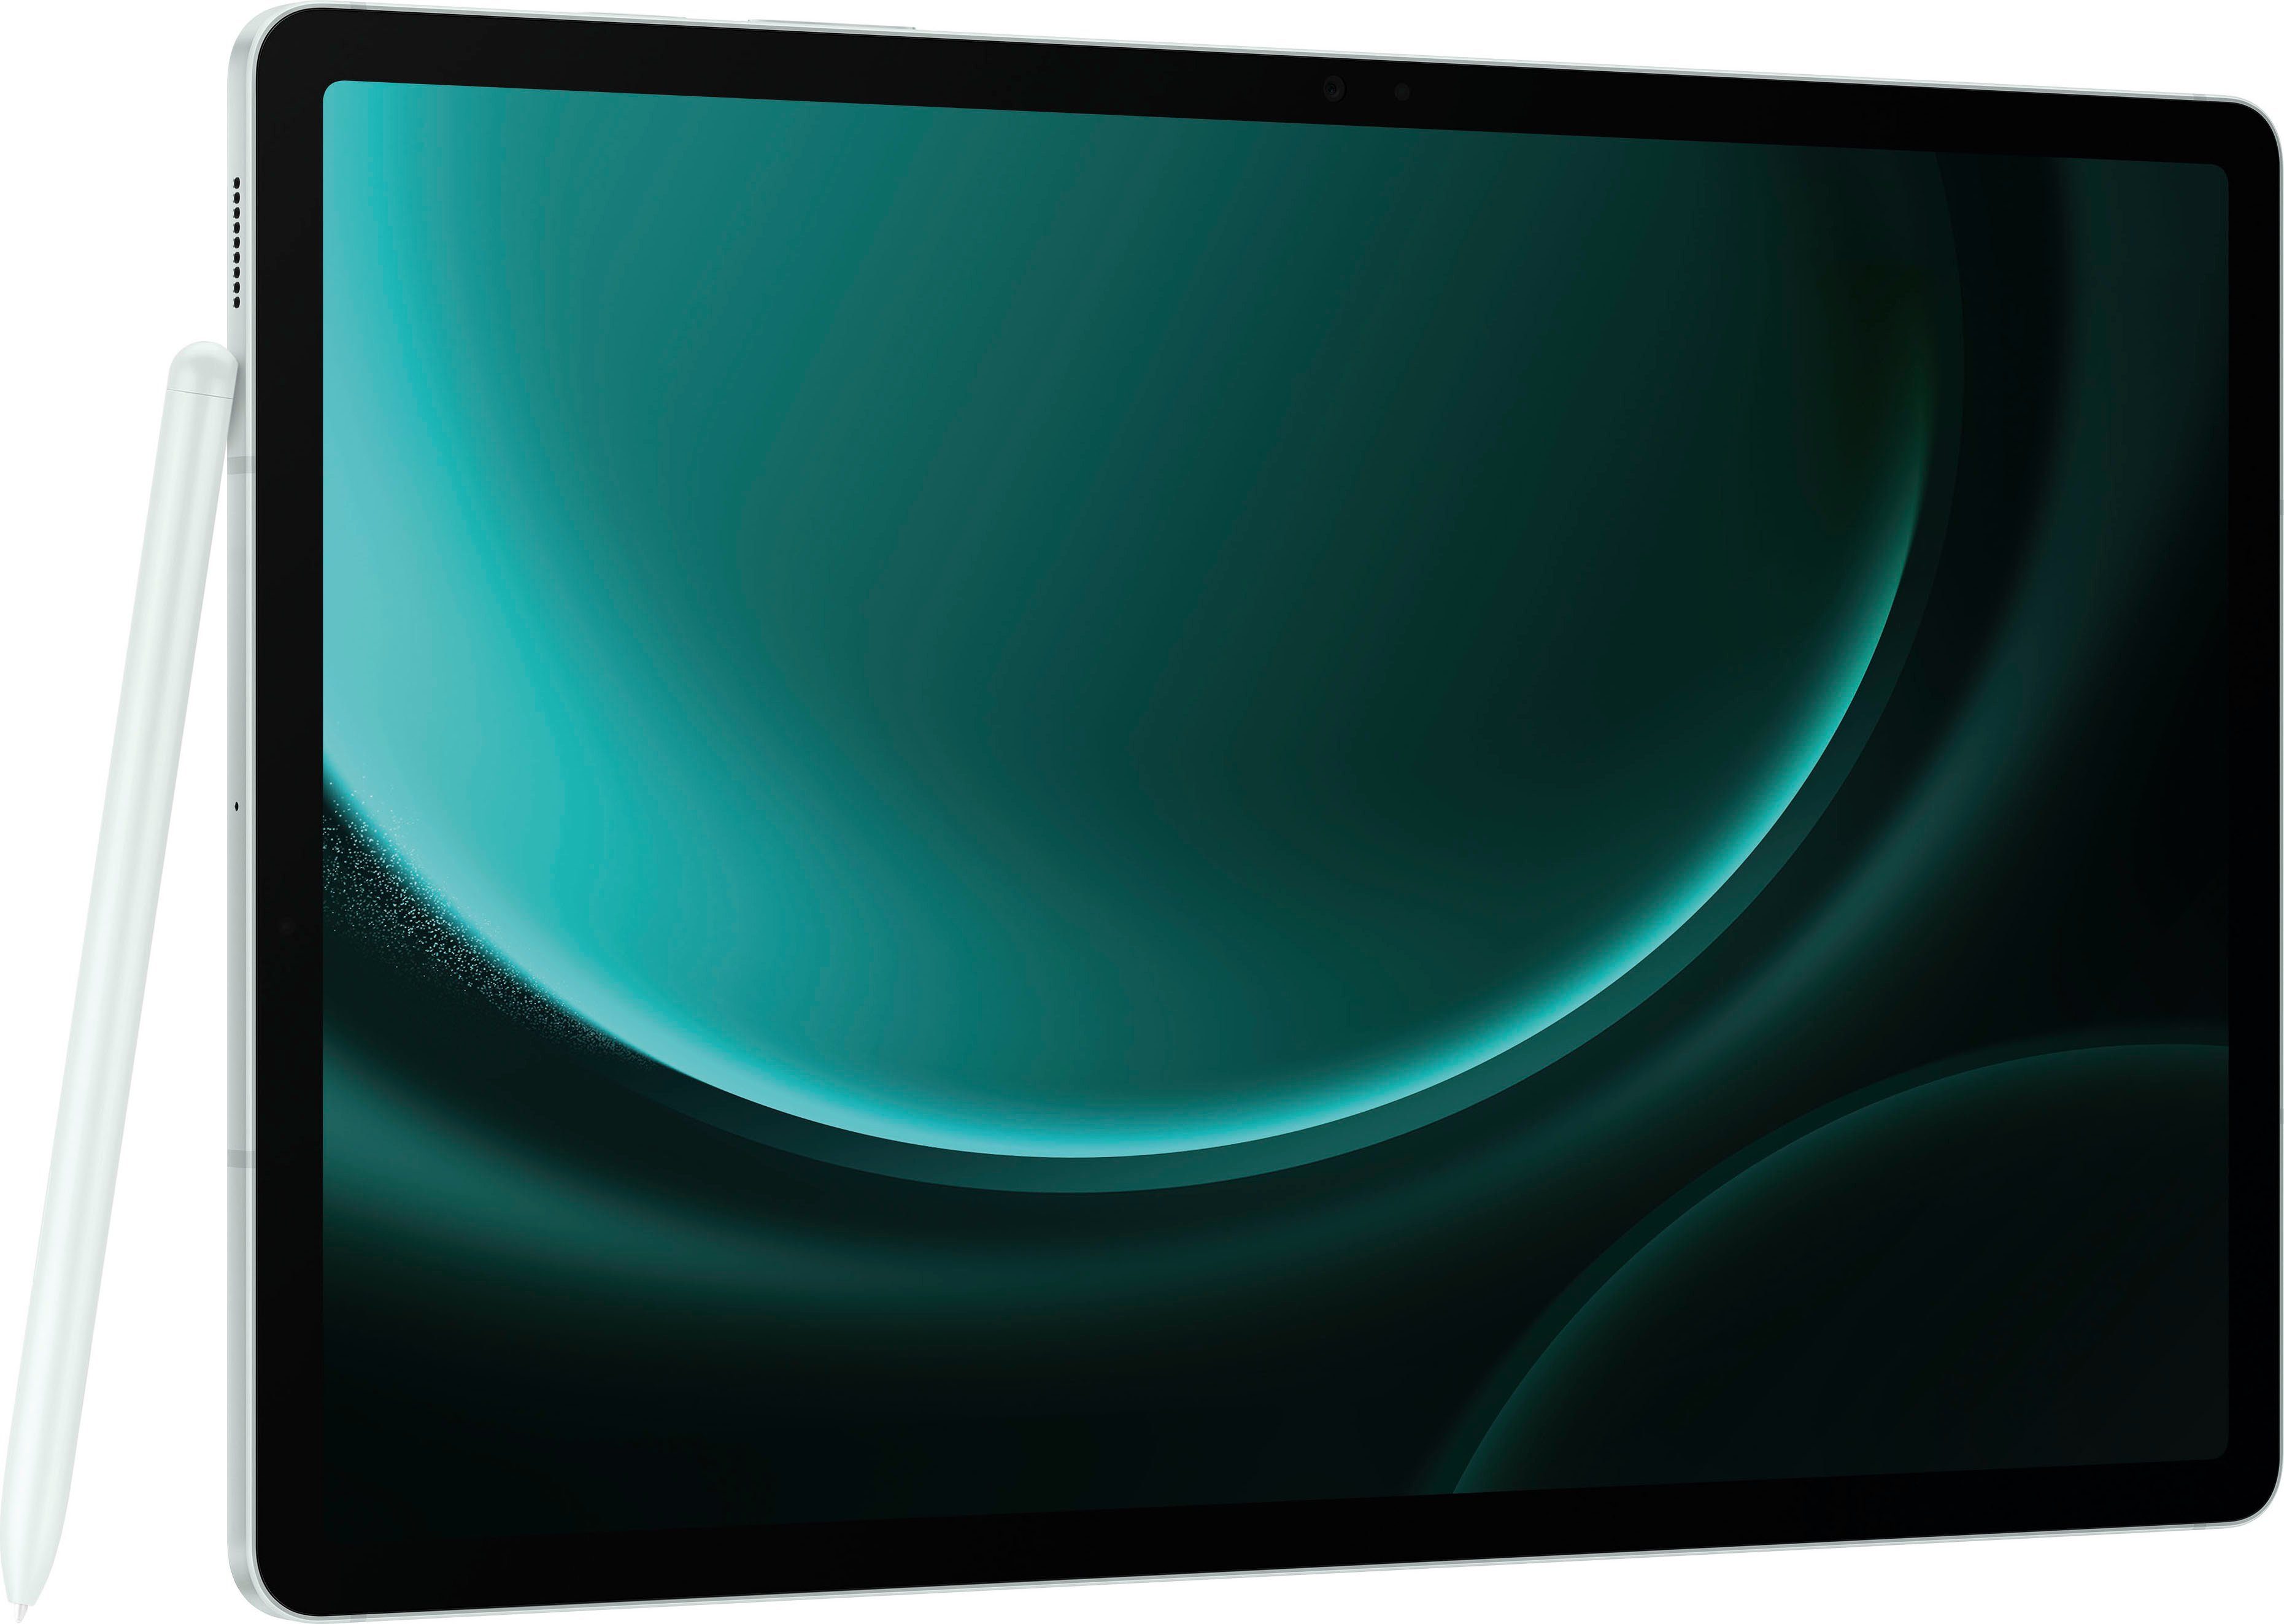 Galaxy Android,One (12,4", Samsung Tab mint 128 FE+ Tablet S9 UI,Knox) GB,